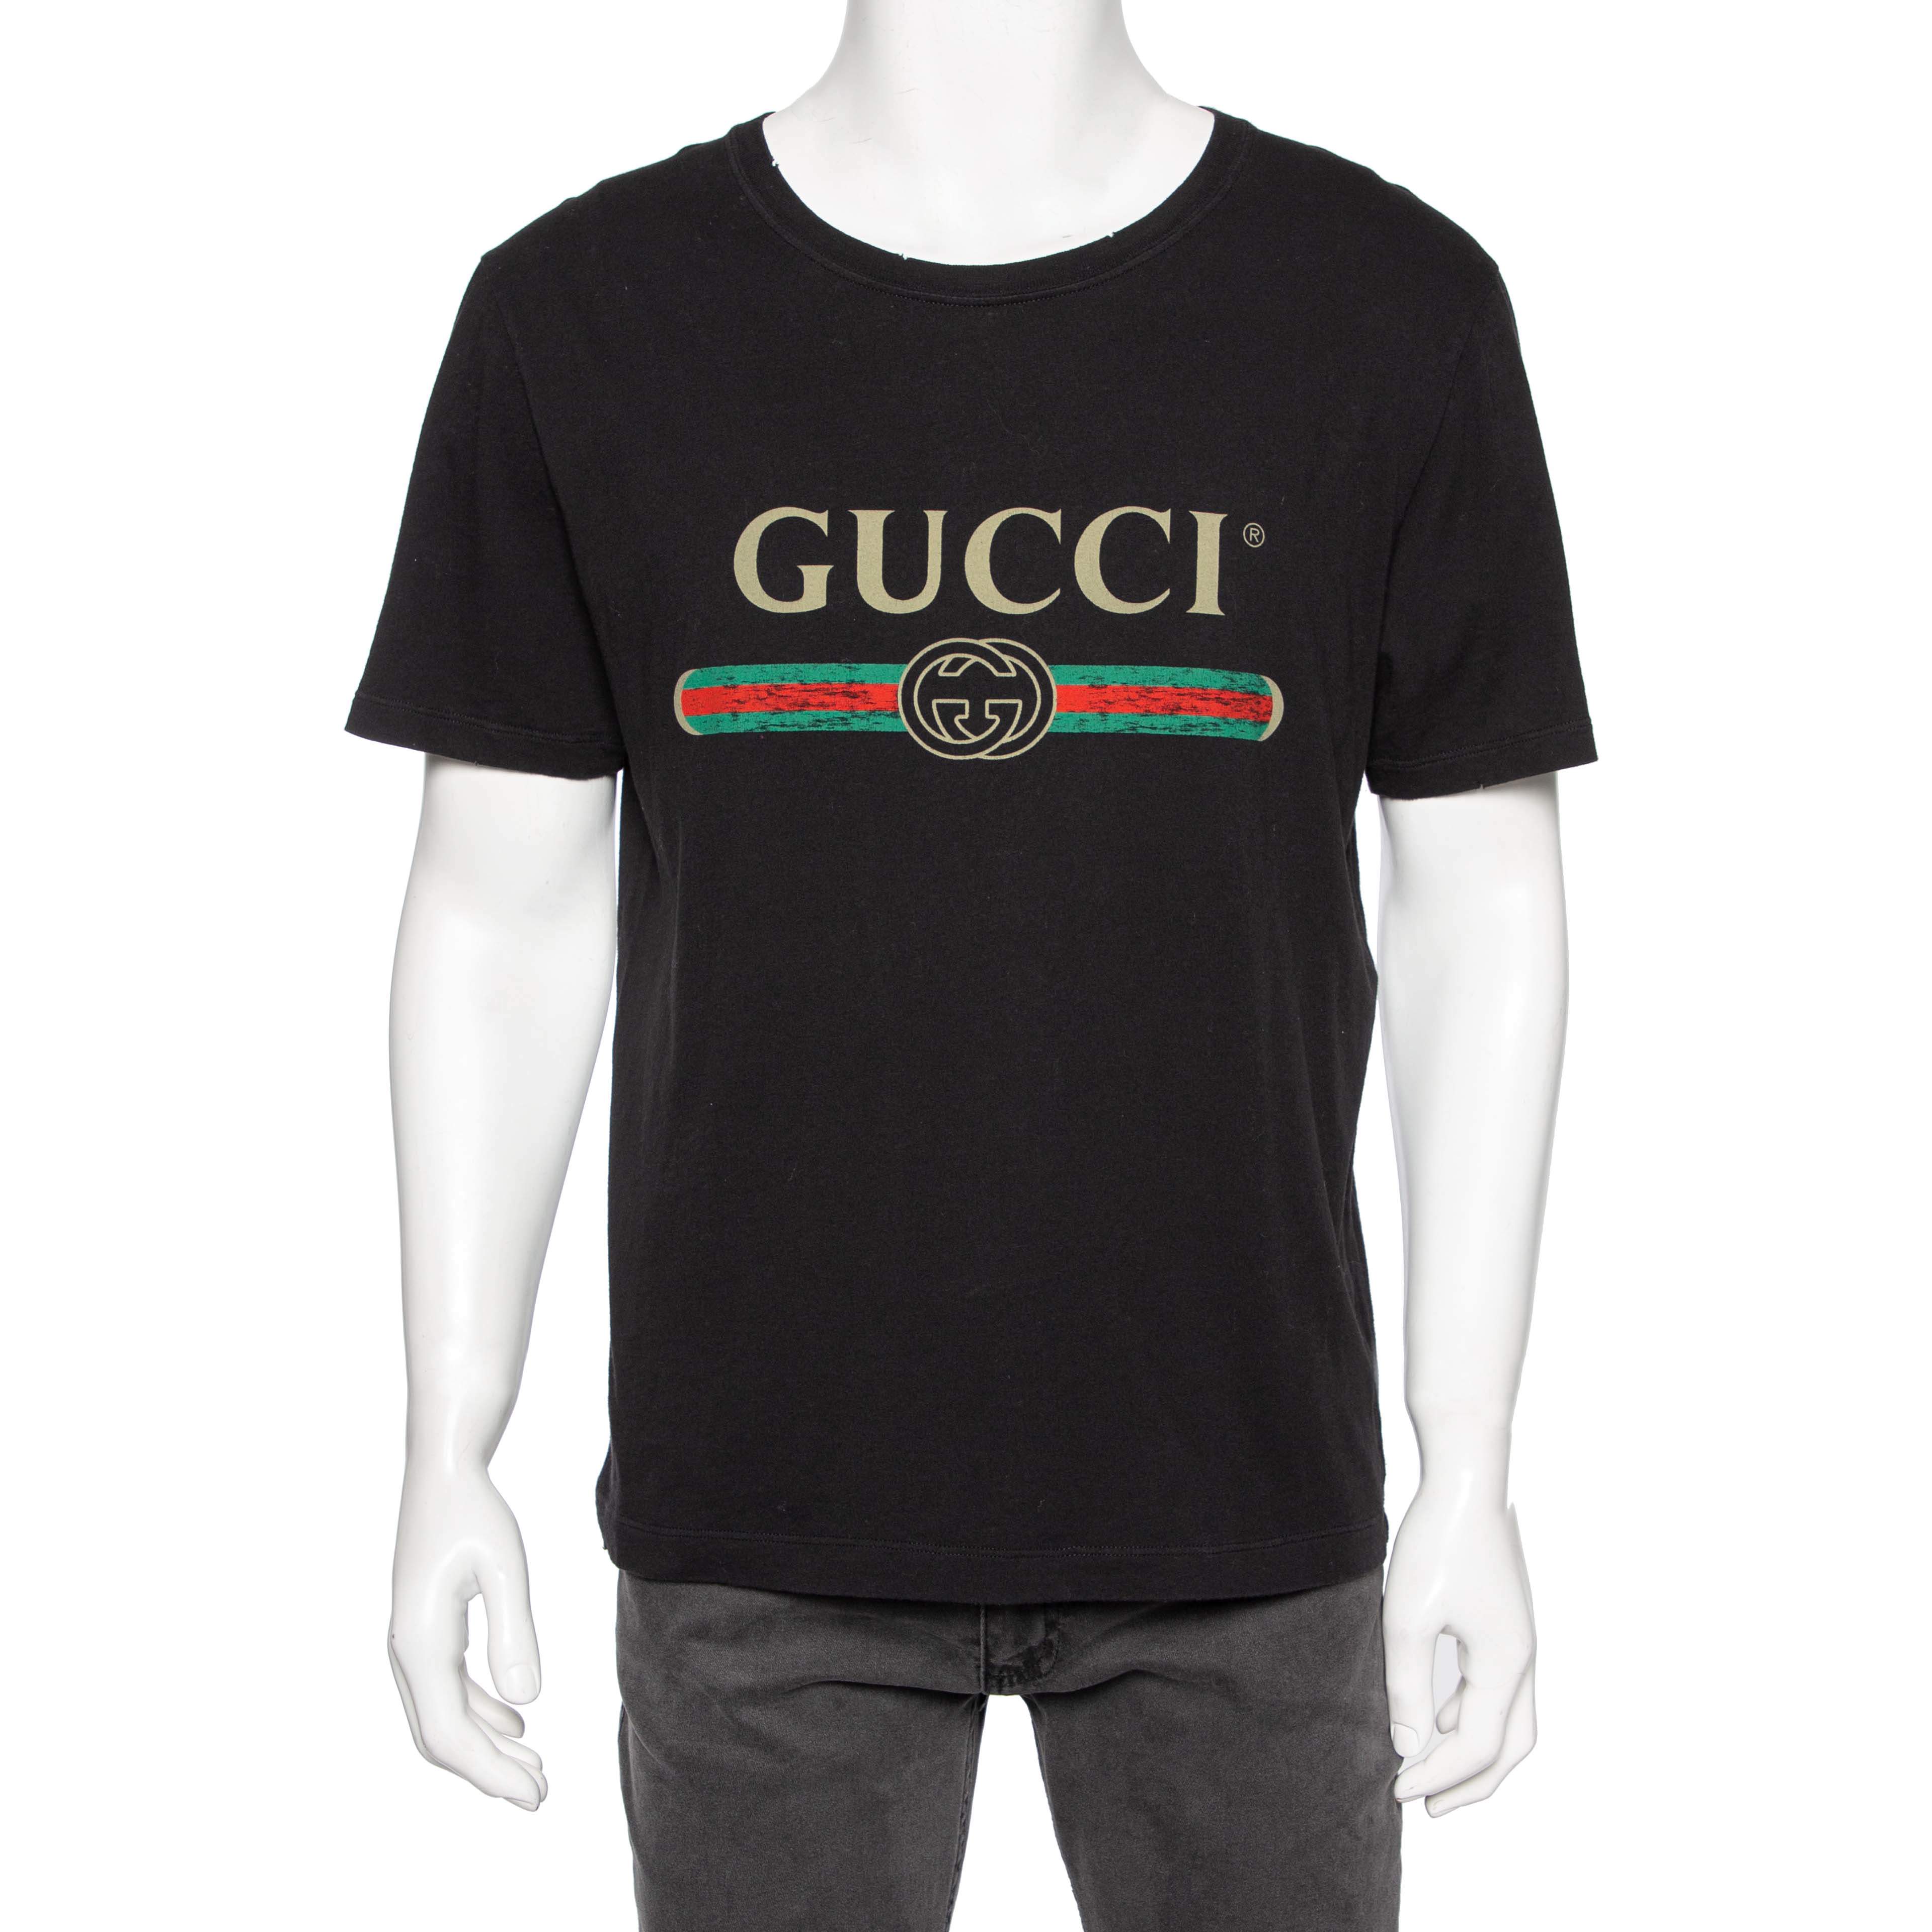 gucci-black-logo-print-washed-cotton-distressed-effect-t-shirt-m-gucci